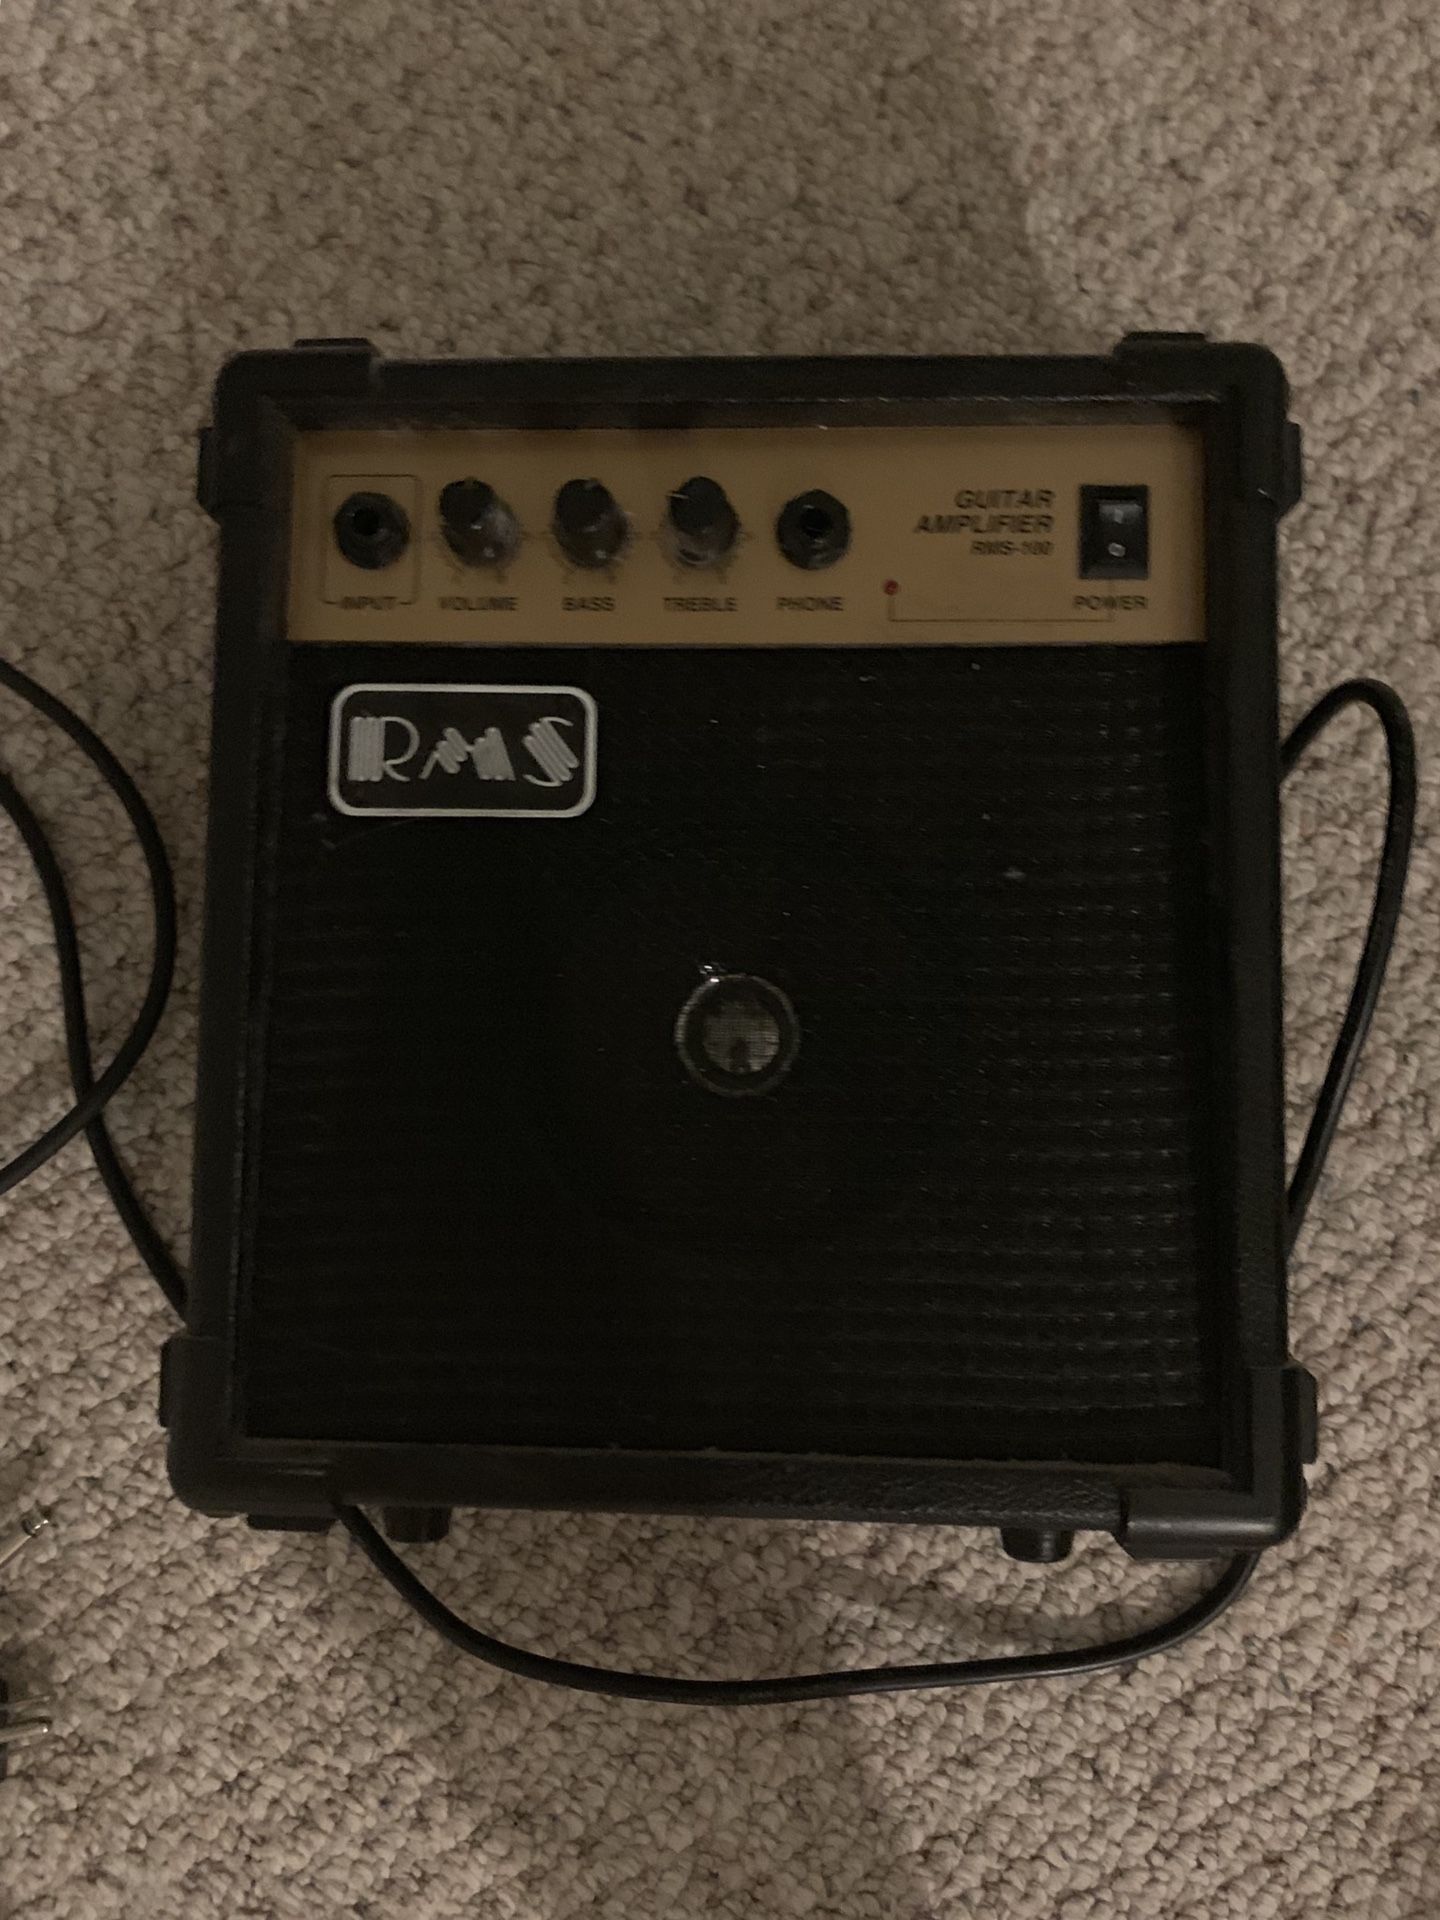 Guitar Amplifier